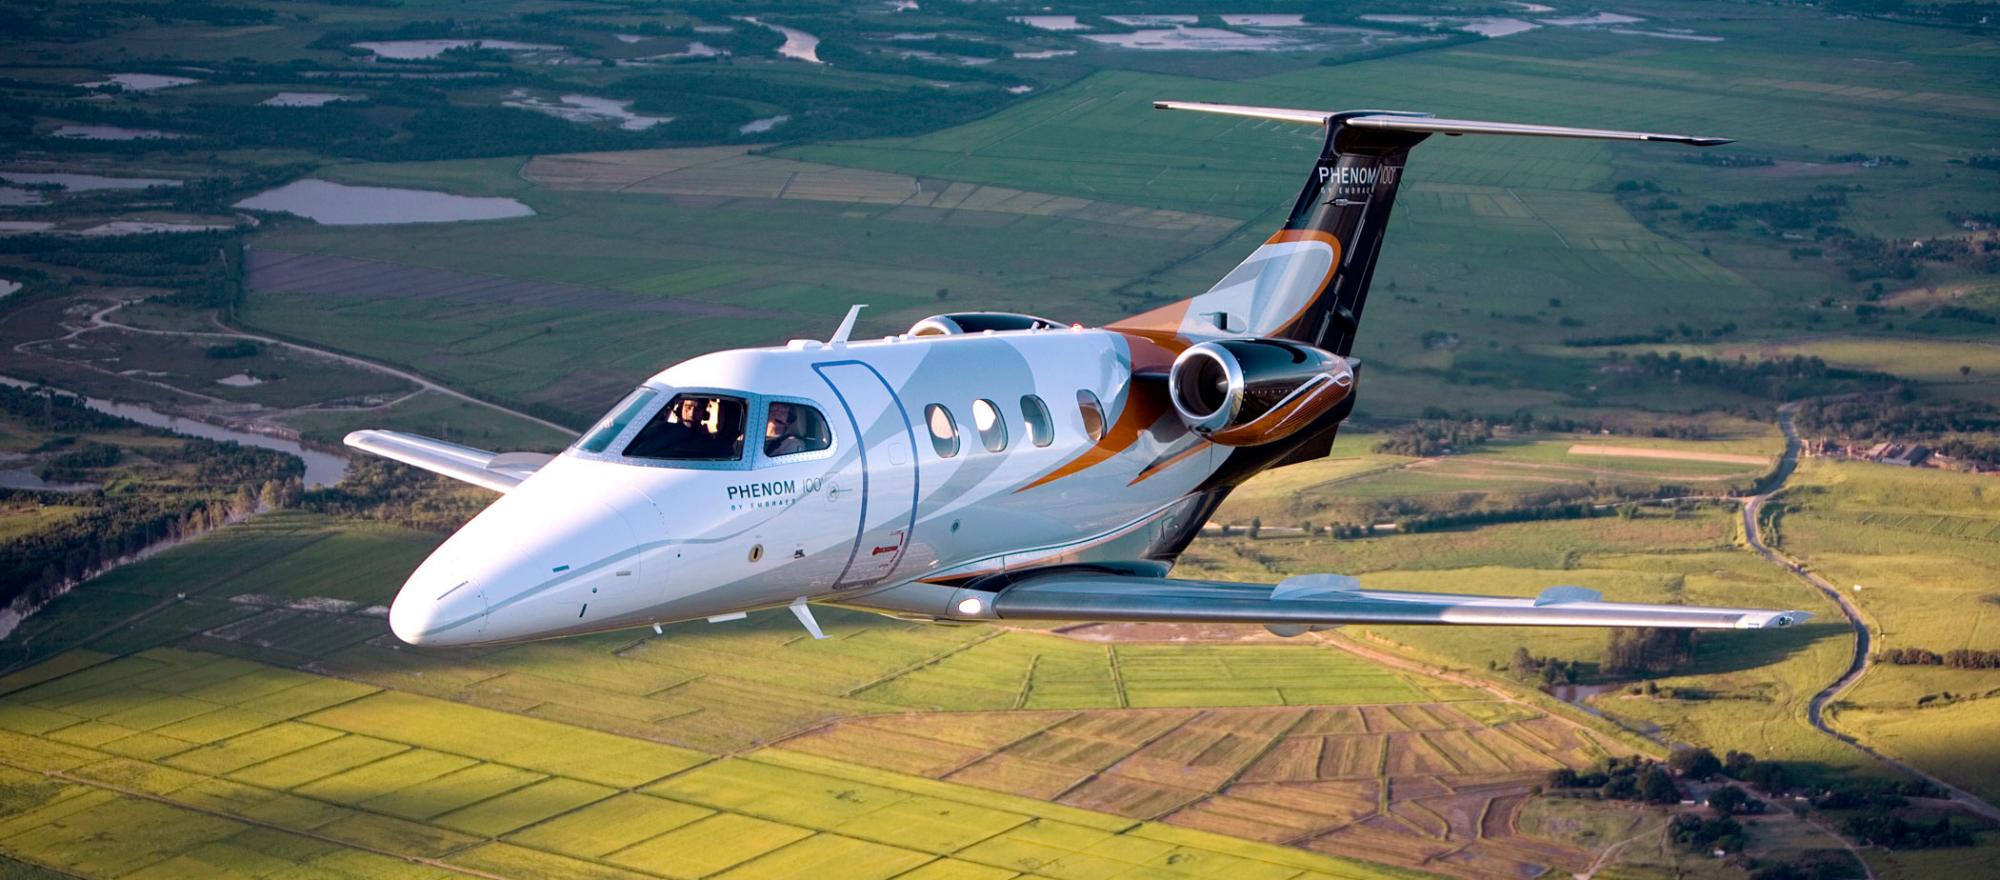 Embraer’s Phenom100 light jet is the value-retention champion.